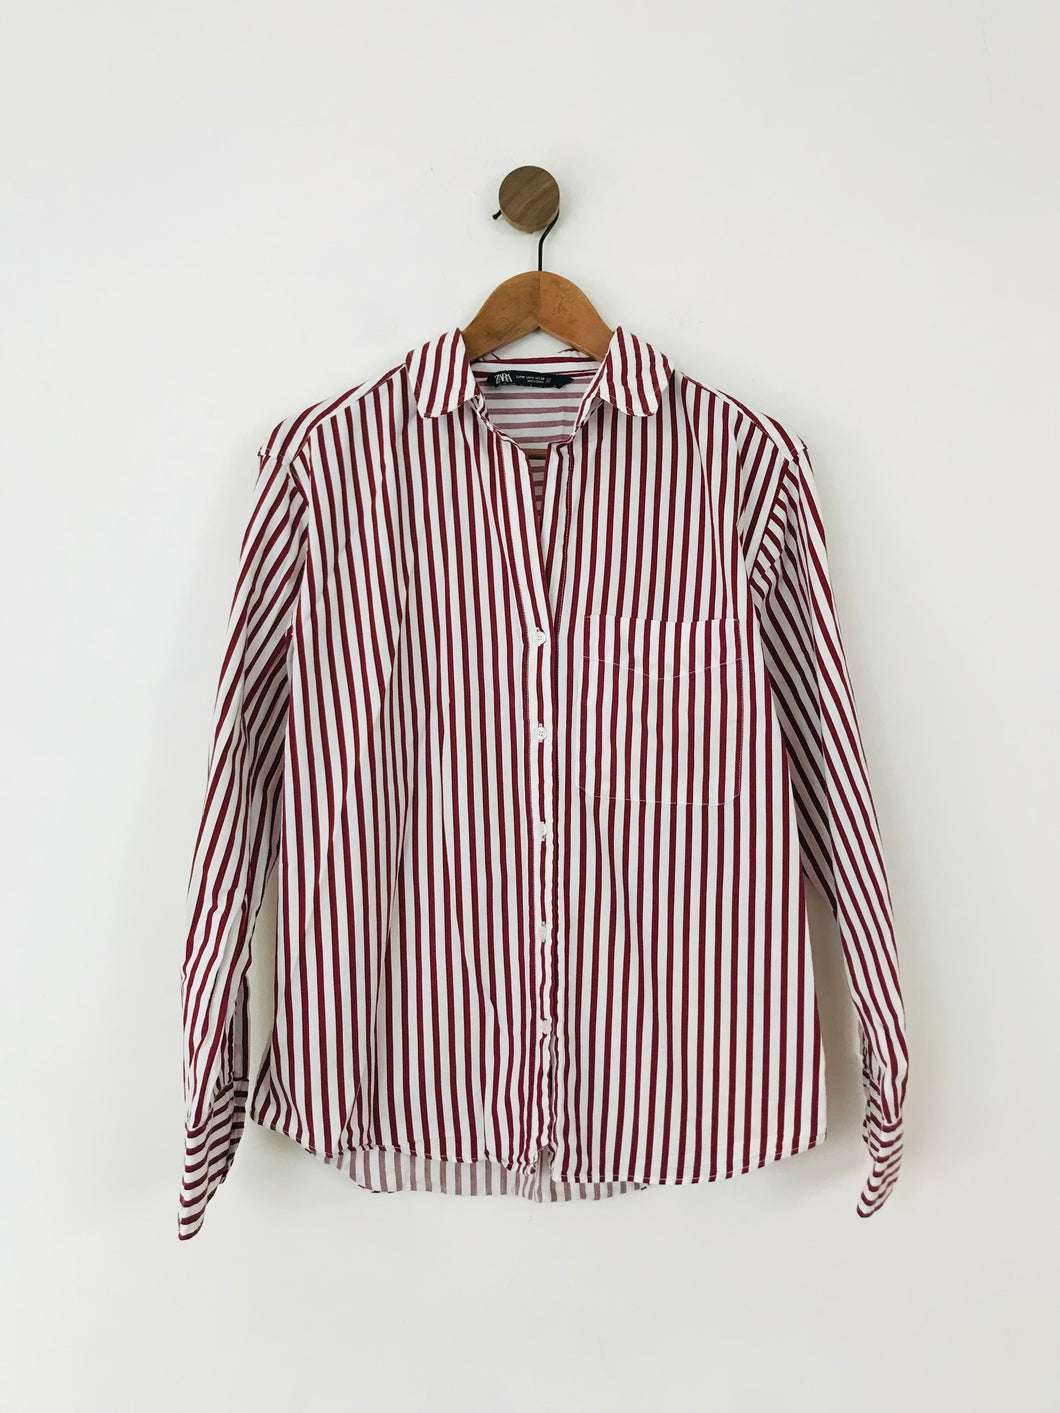 Zara Women's Striped Button-Up Shirt | M UK10-12 | Red